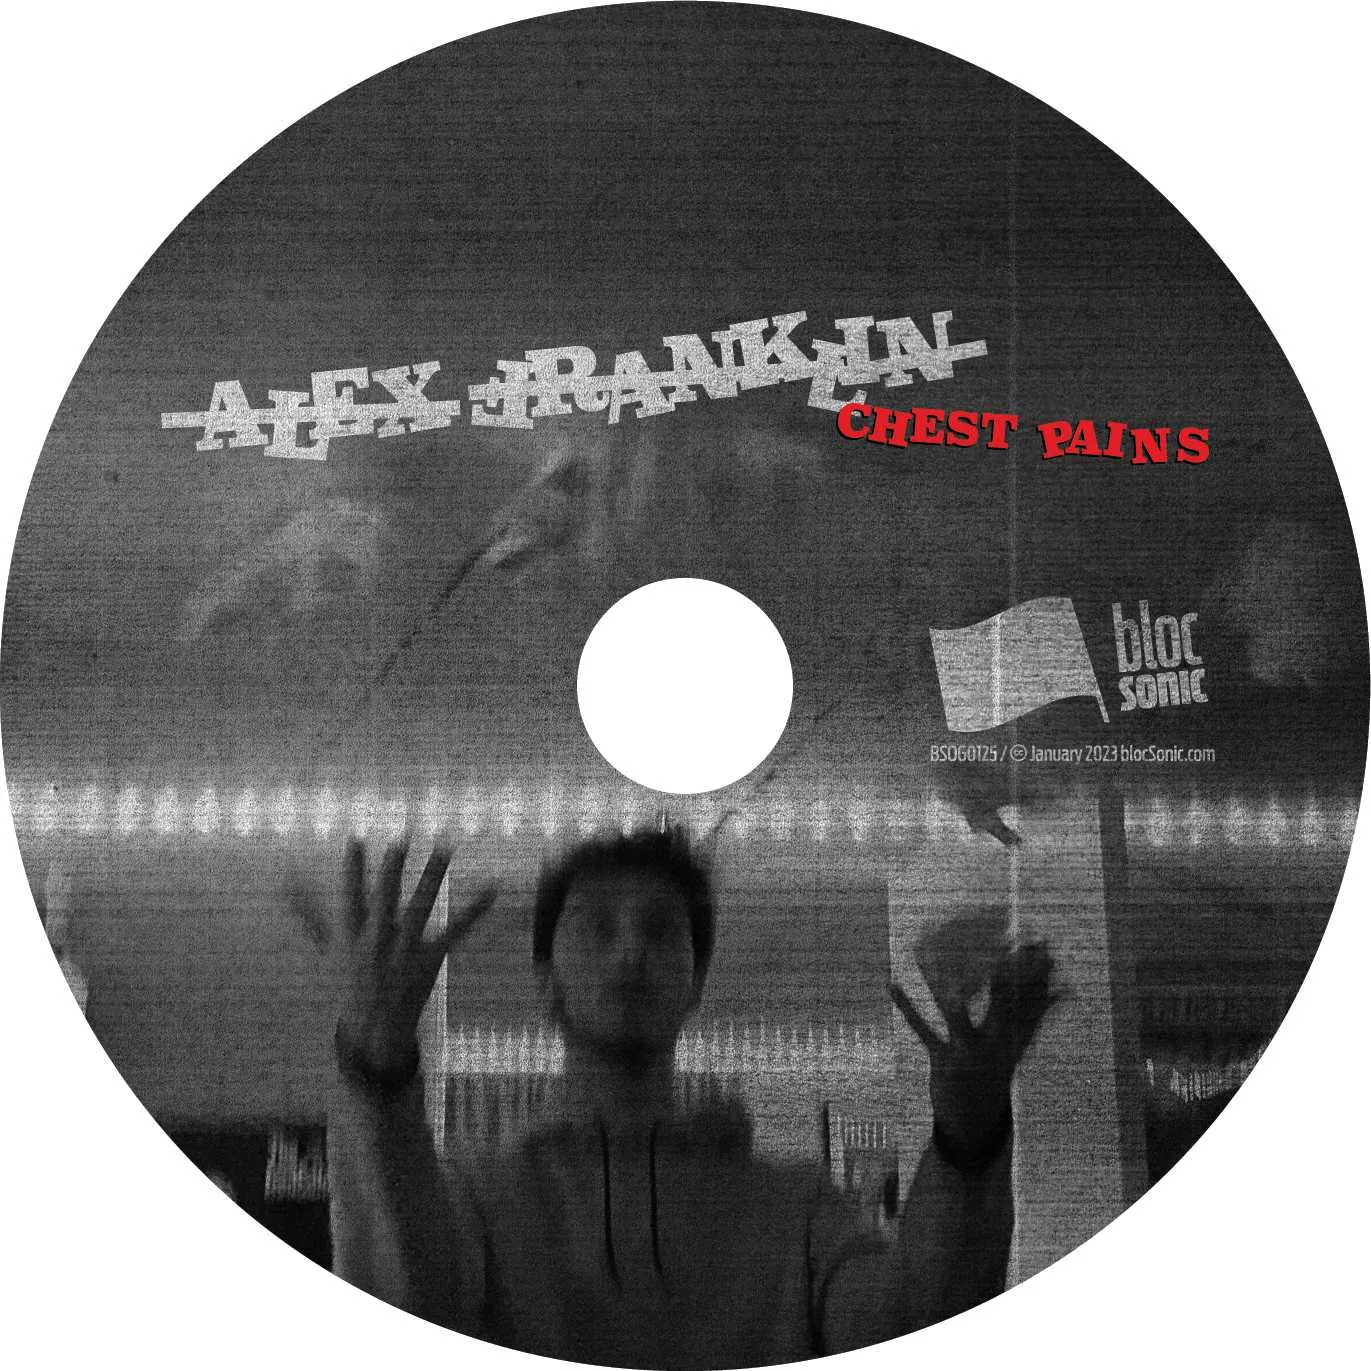 Album disc for “Chest Pains” by Alex Franklin